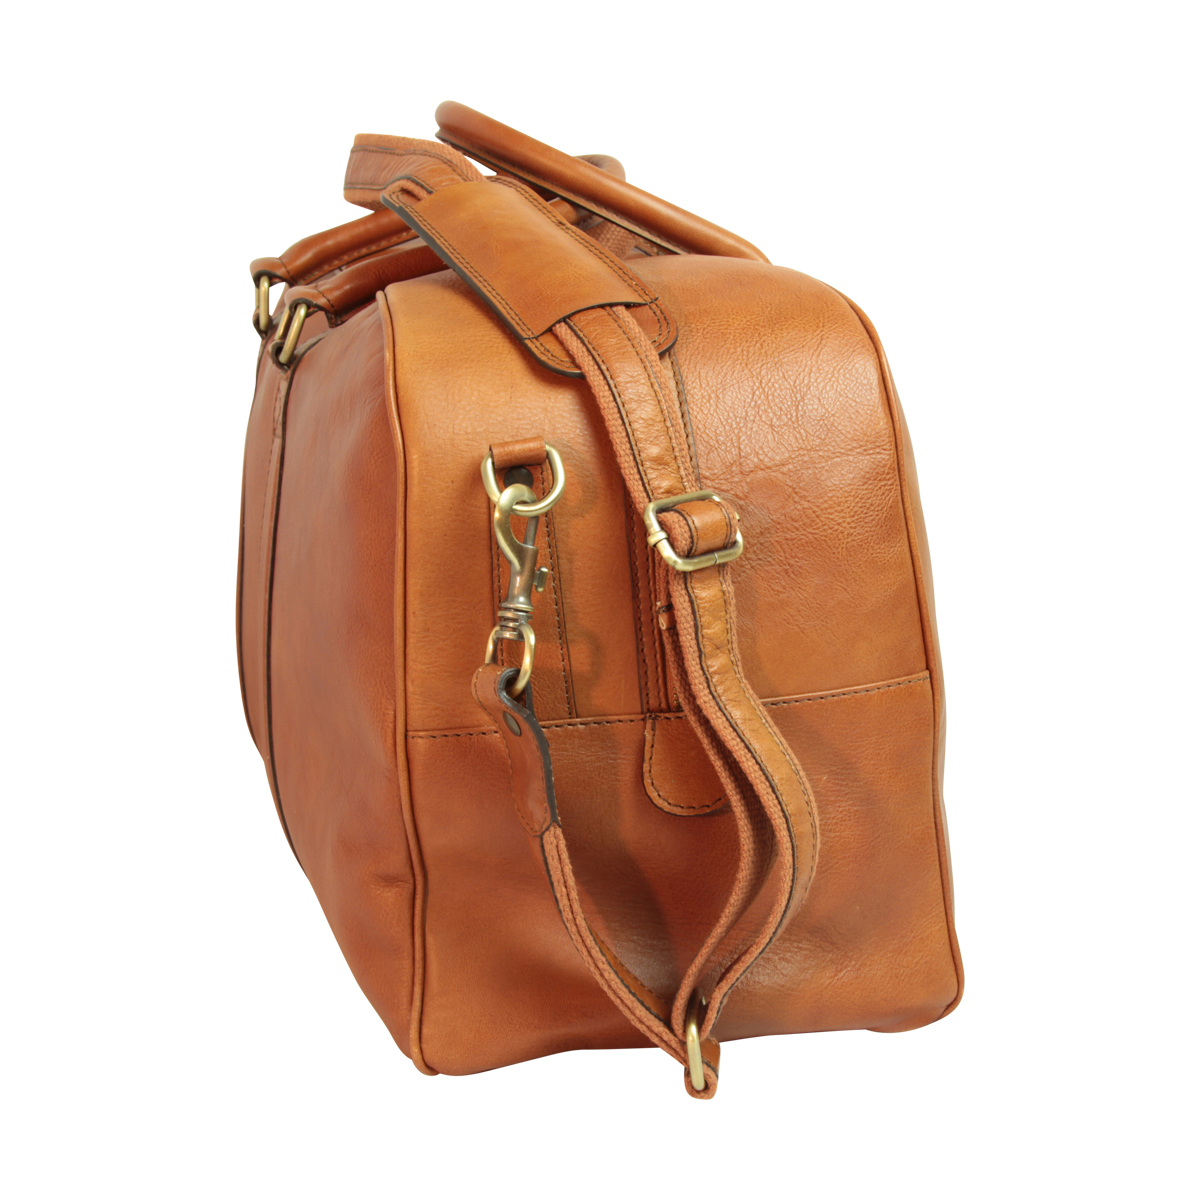 Soft Calfskin Leather Travel Bag - Gold | 030591CO | EURO | Old Angler Firenze